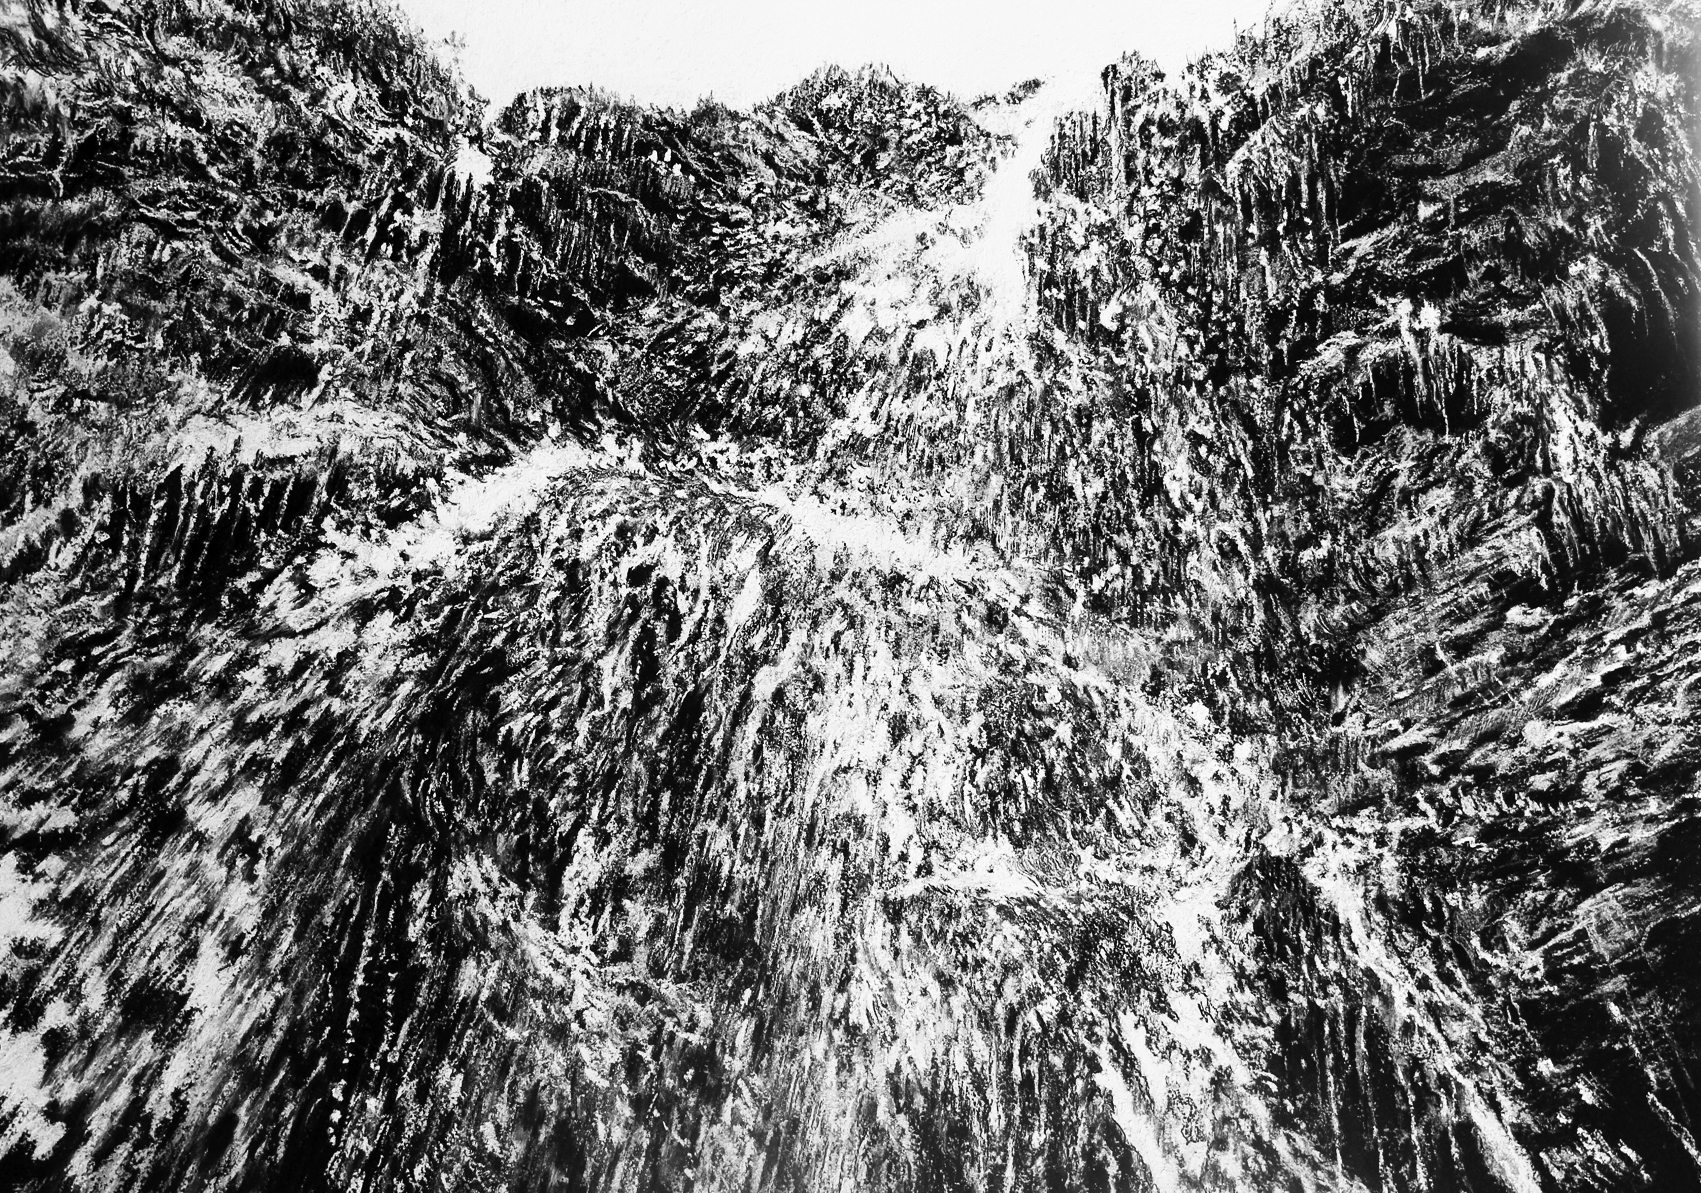 Judith Tucker, "Waterfall" from the Tributaries Series, 2013